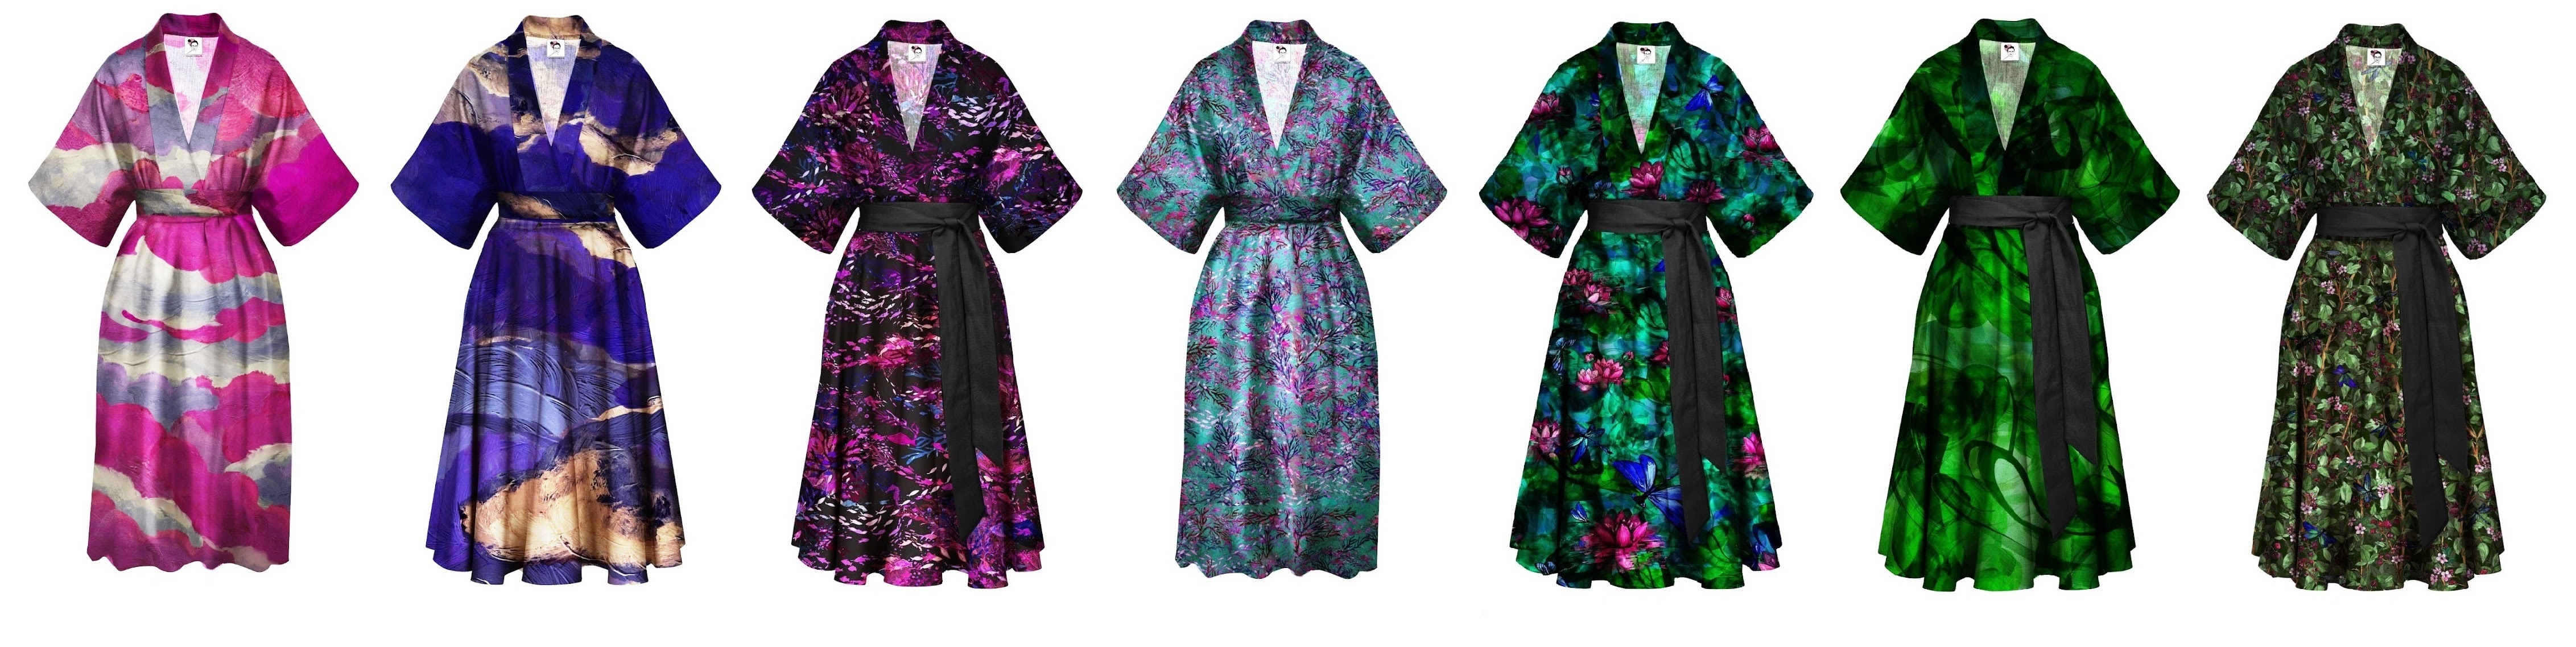 kimonowe sukienki nawrotanka